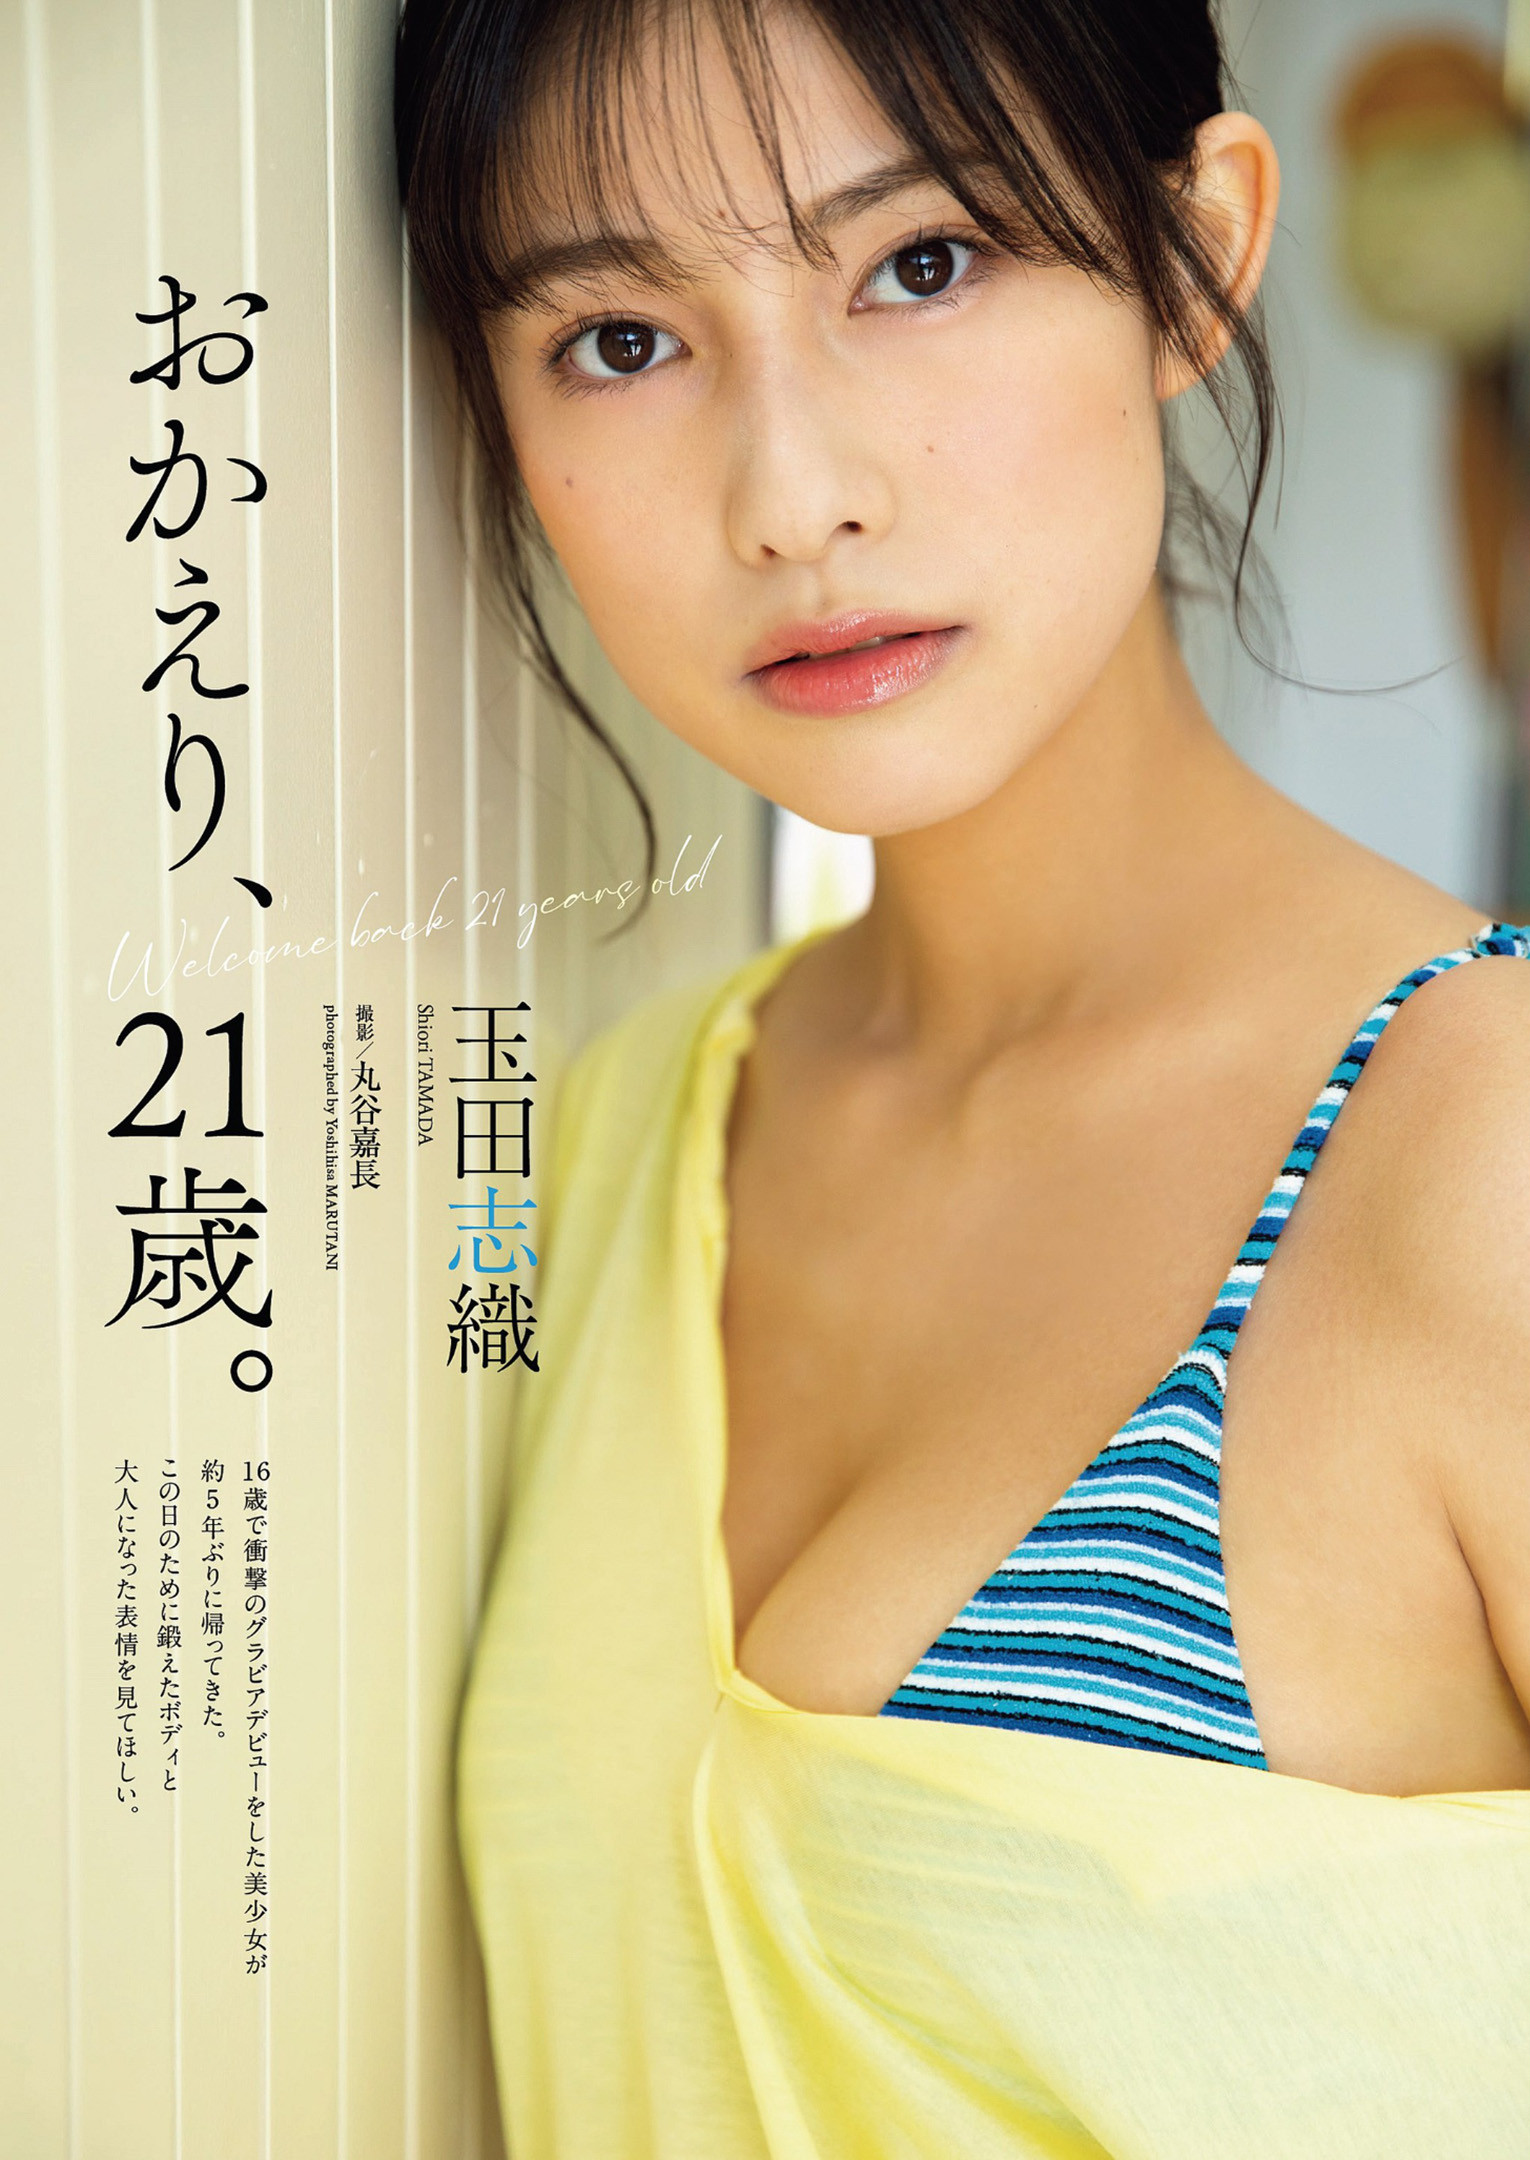 Shiori Tamada 玉田志織, Weekly Playboy 2023 No.16-17 (週刊プレイボーイ 2023年16-17号)